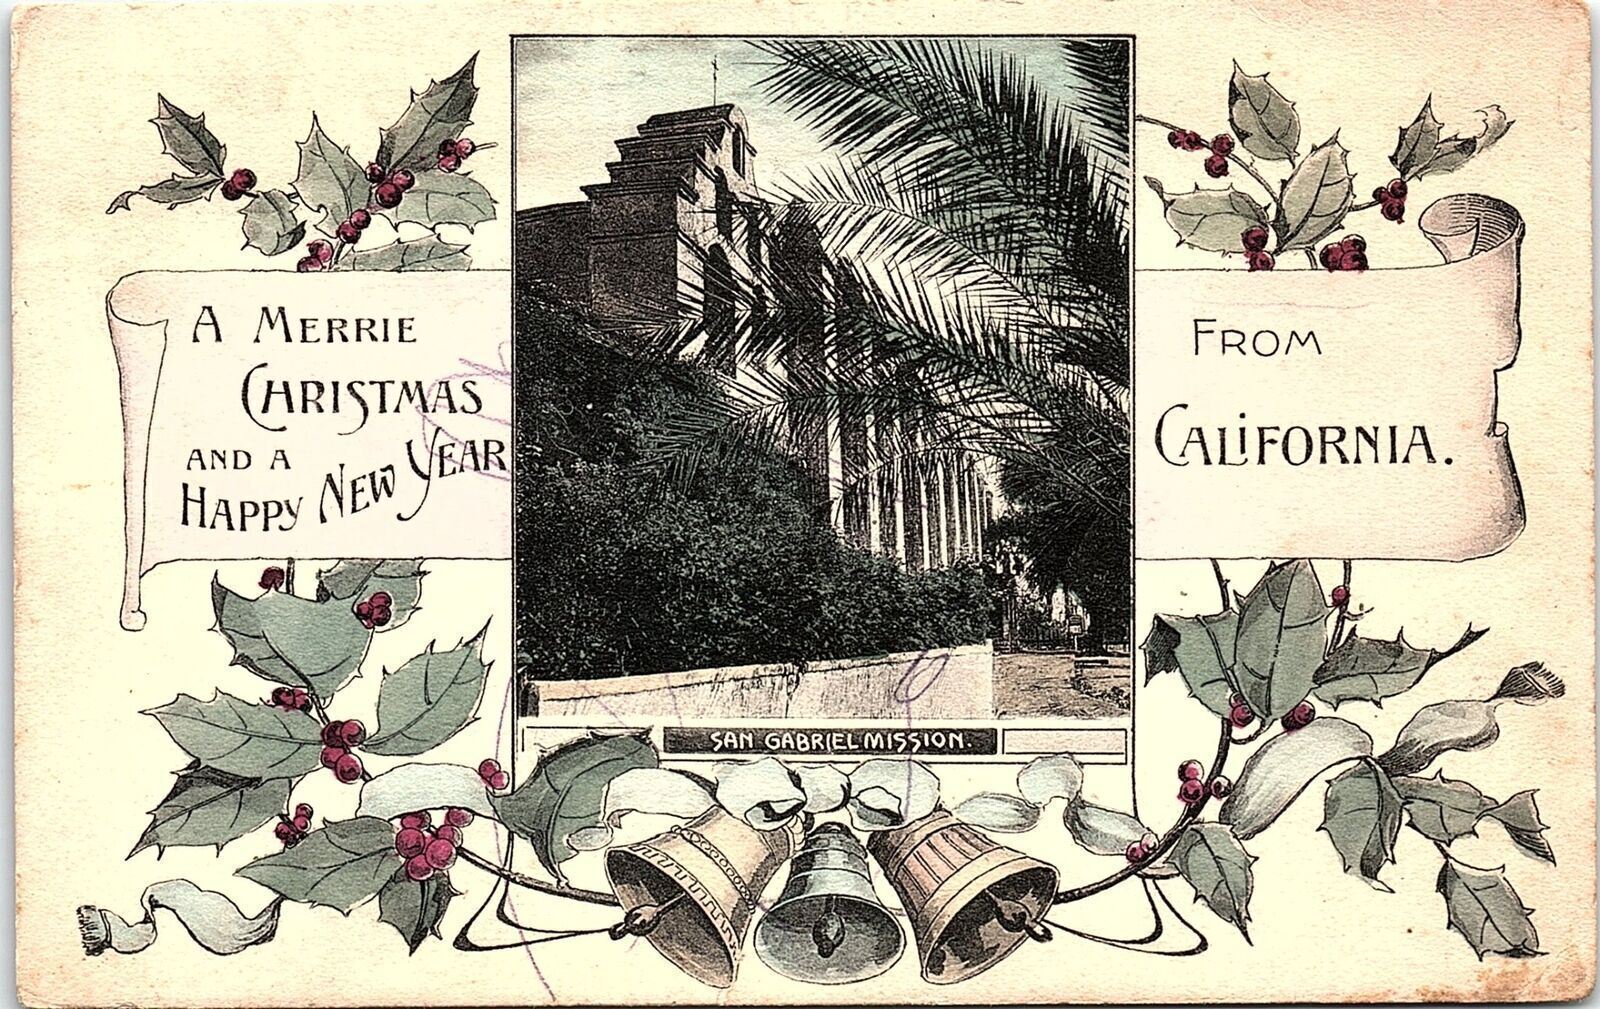 1911 SAN GABRIEL MISSION CALIFORNIA MERRIE CHRISTMAS NEW YEAR POSTCARD 41-274